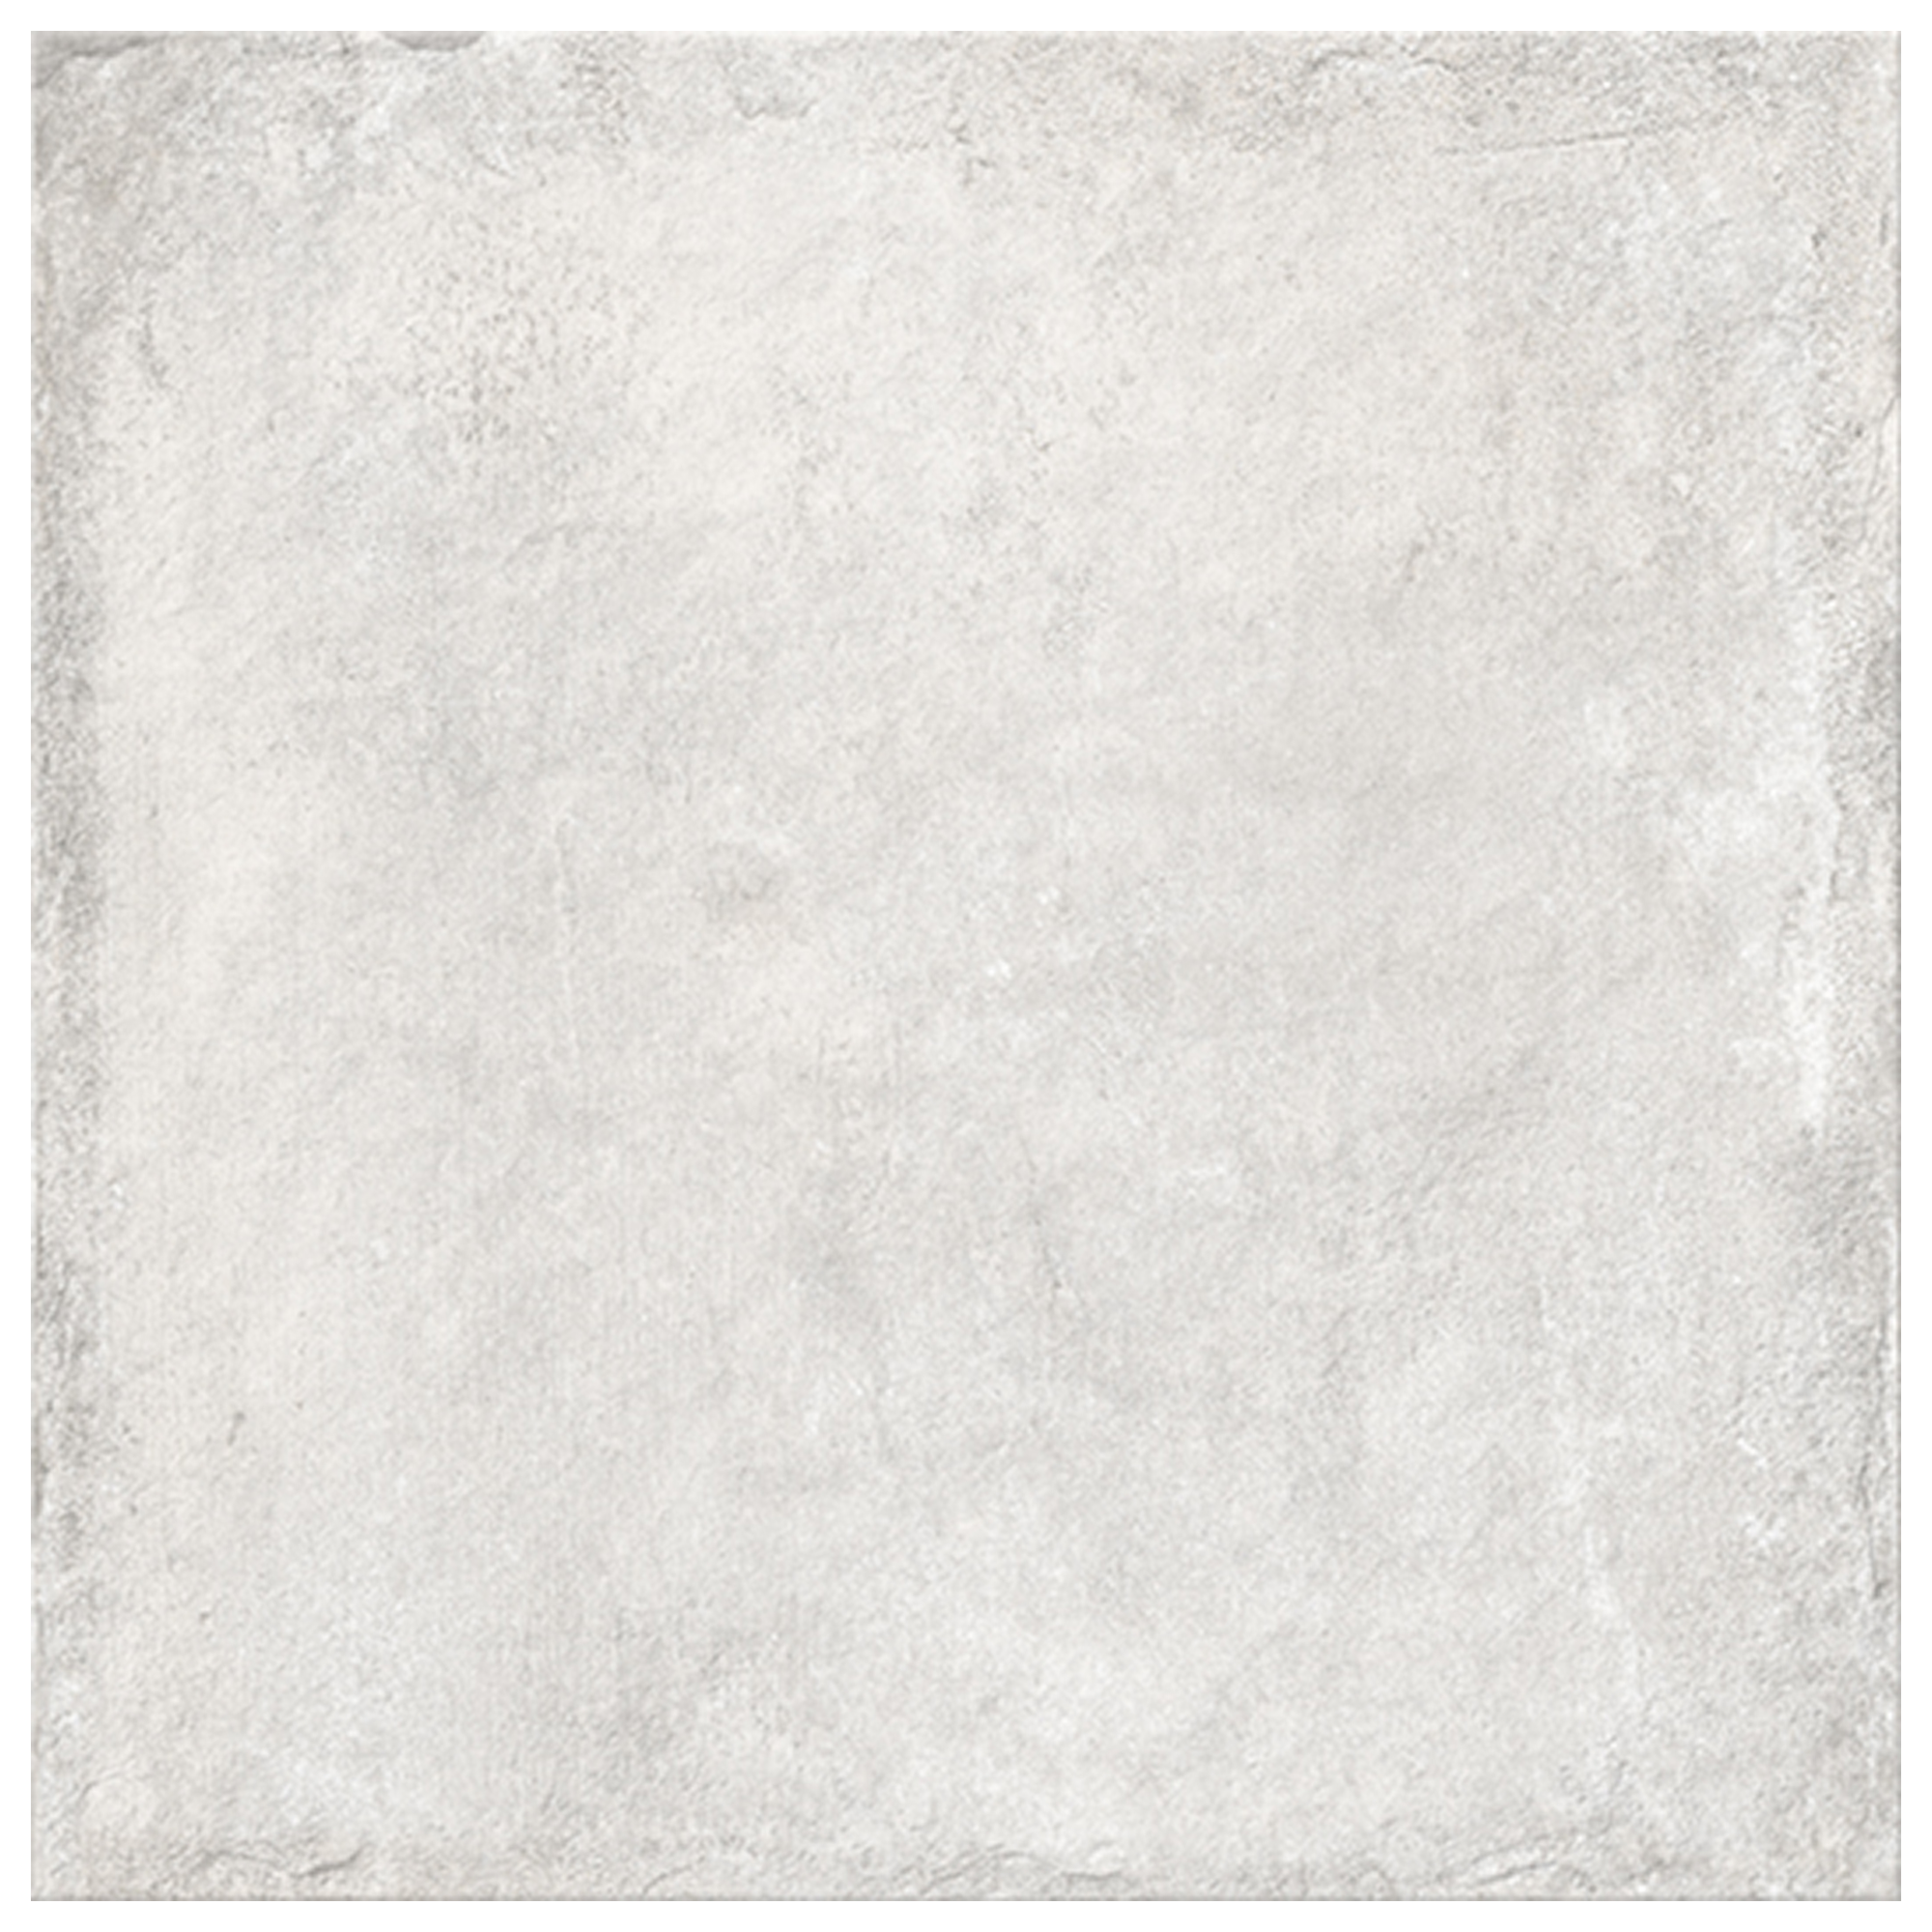 Suelo porcelánico cazorla efecto terracota blanco 45x45 cm c1 grespania